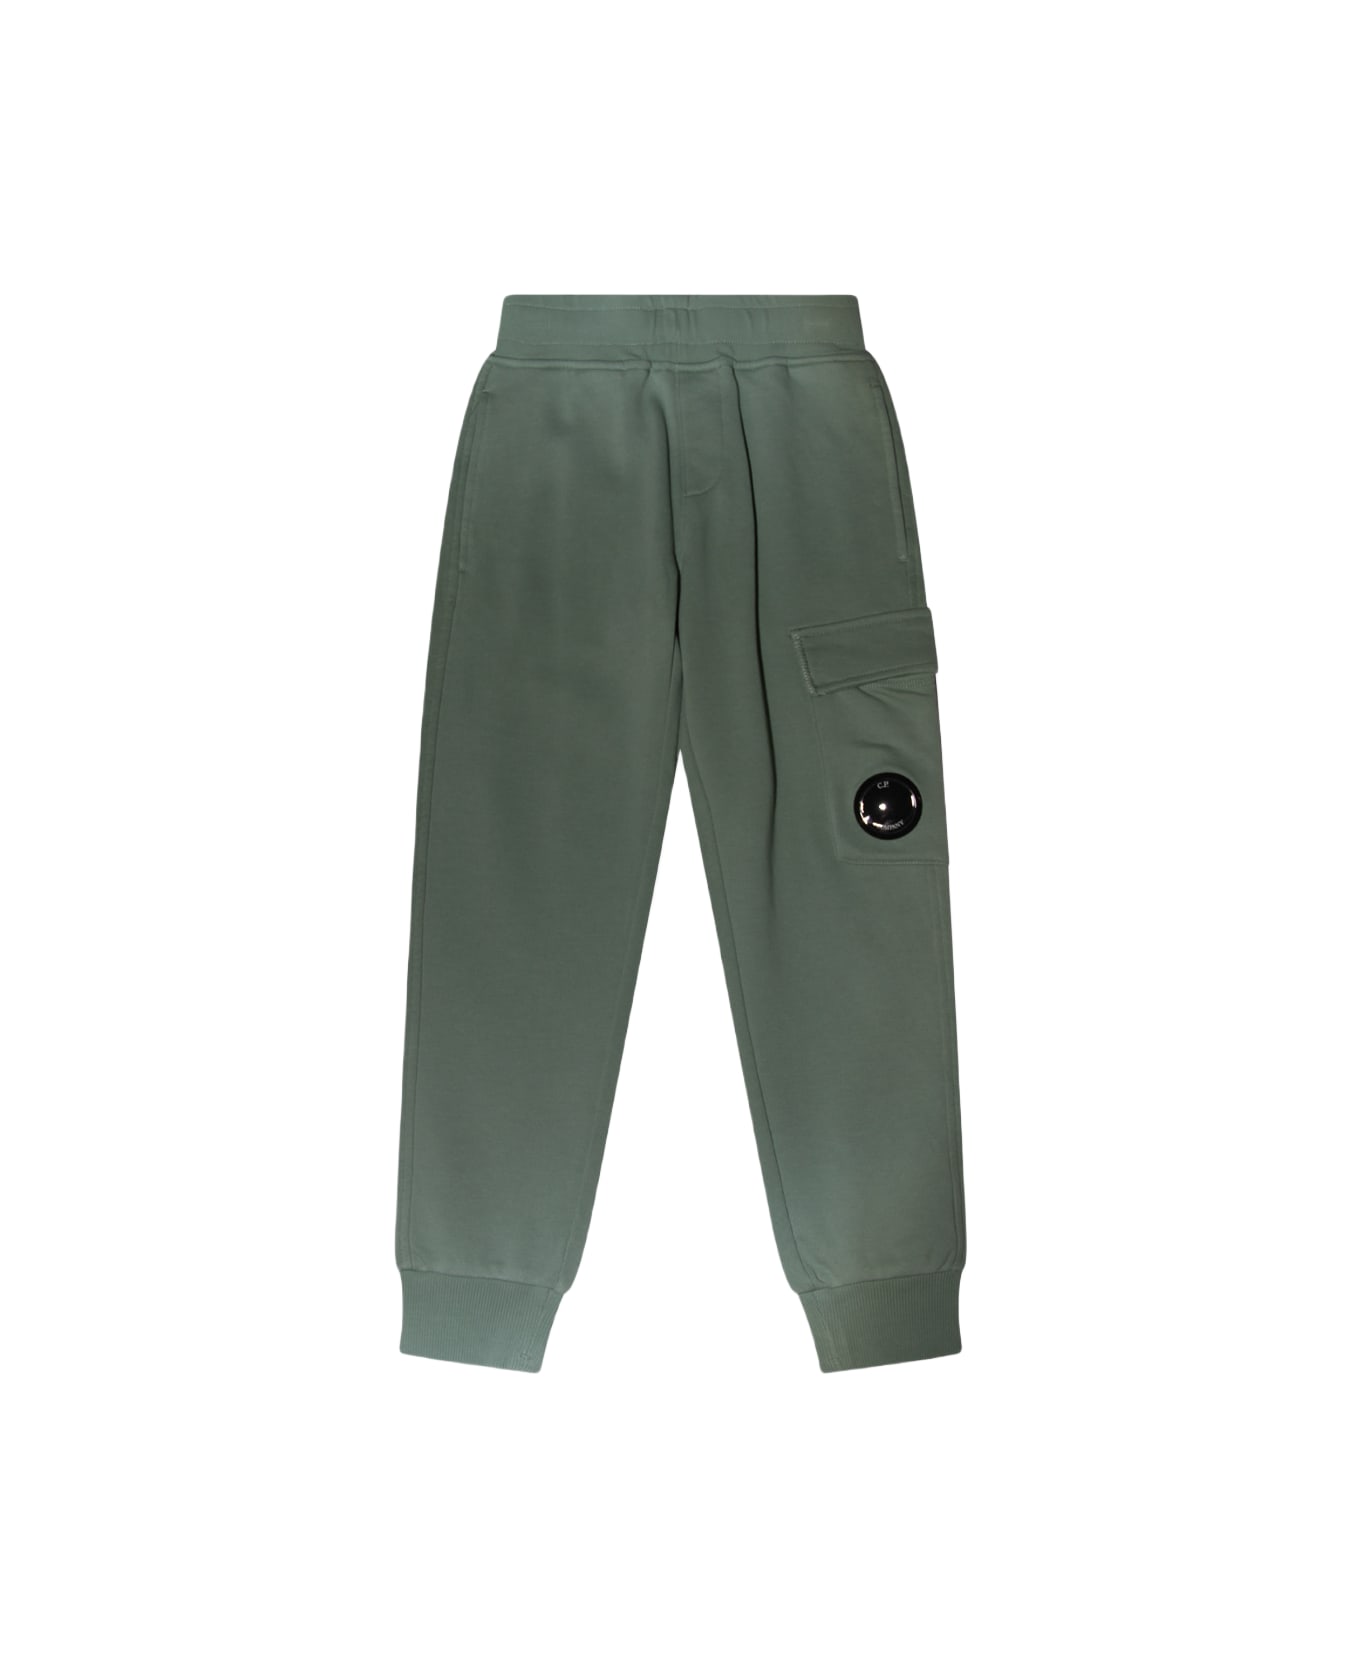 C.P. Company Undersixteen Green Cotton Pants - Green Bay ボトムス